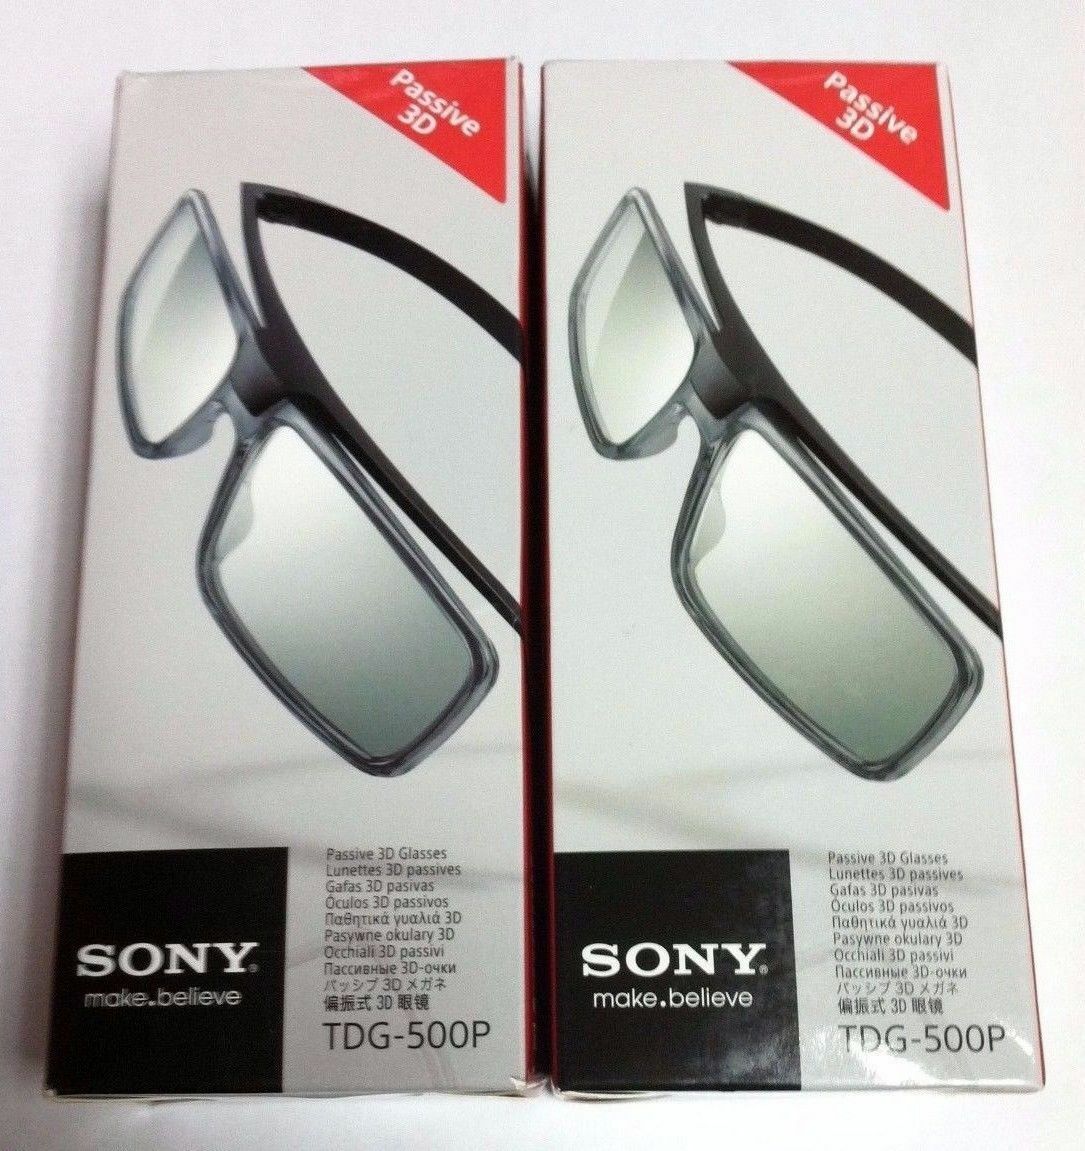 (2-pack) Sony Genuine Tdg-500p Lightweight Passive 3d Glasses Tgd500p New Sealed